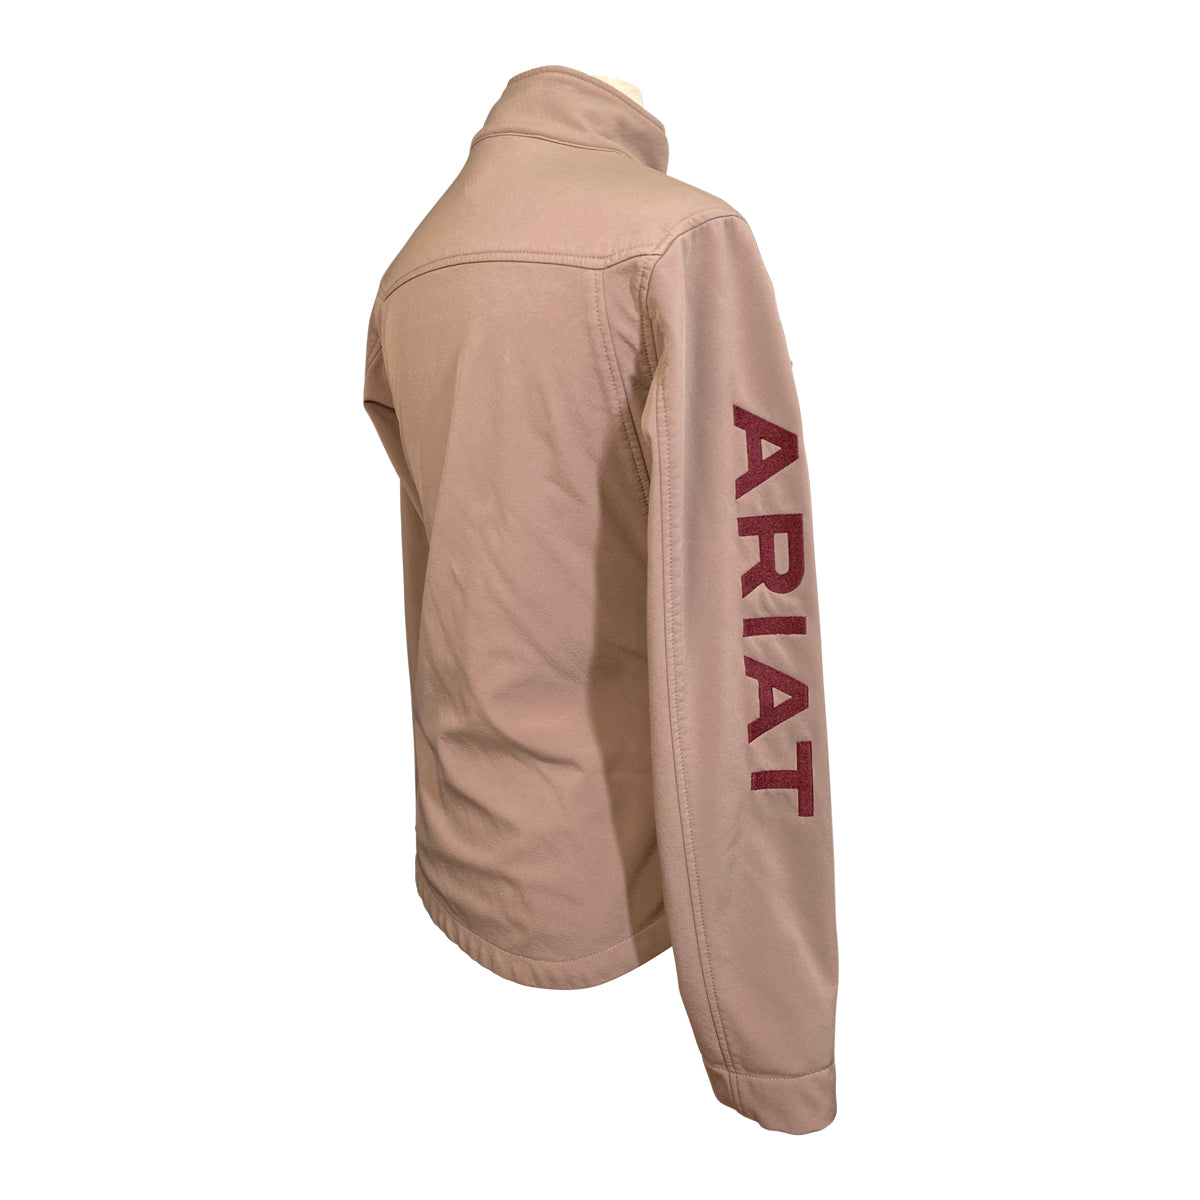 Ariat 'New Team' Softshell Jacket in Barnwood